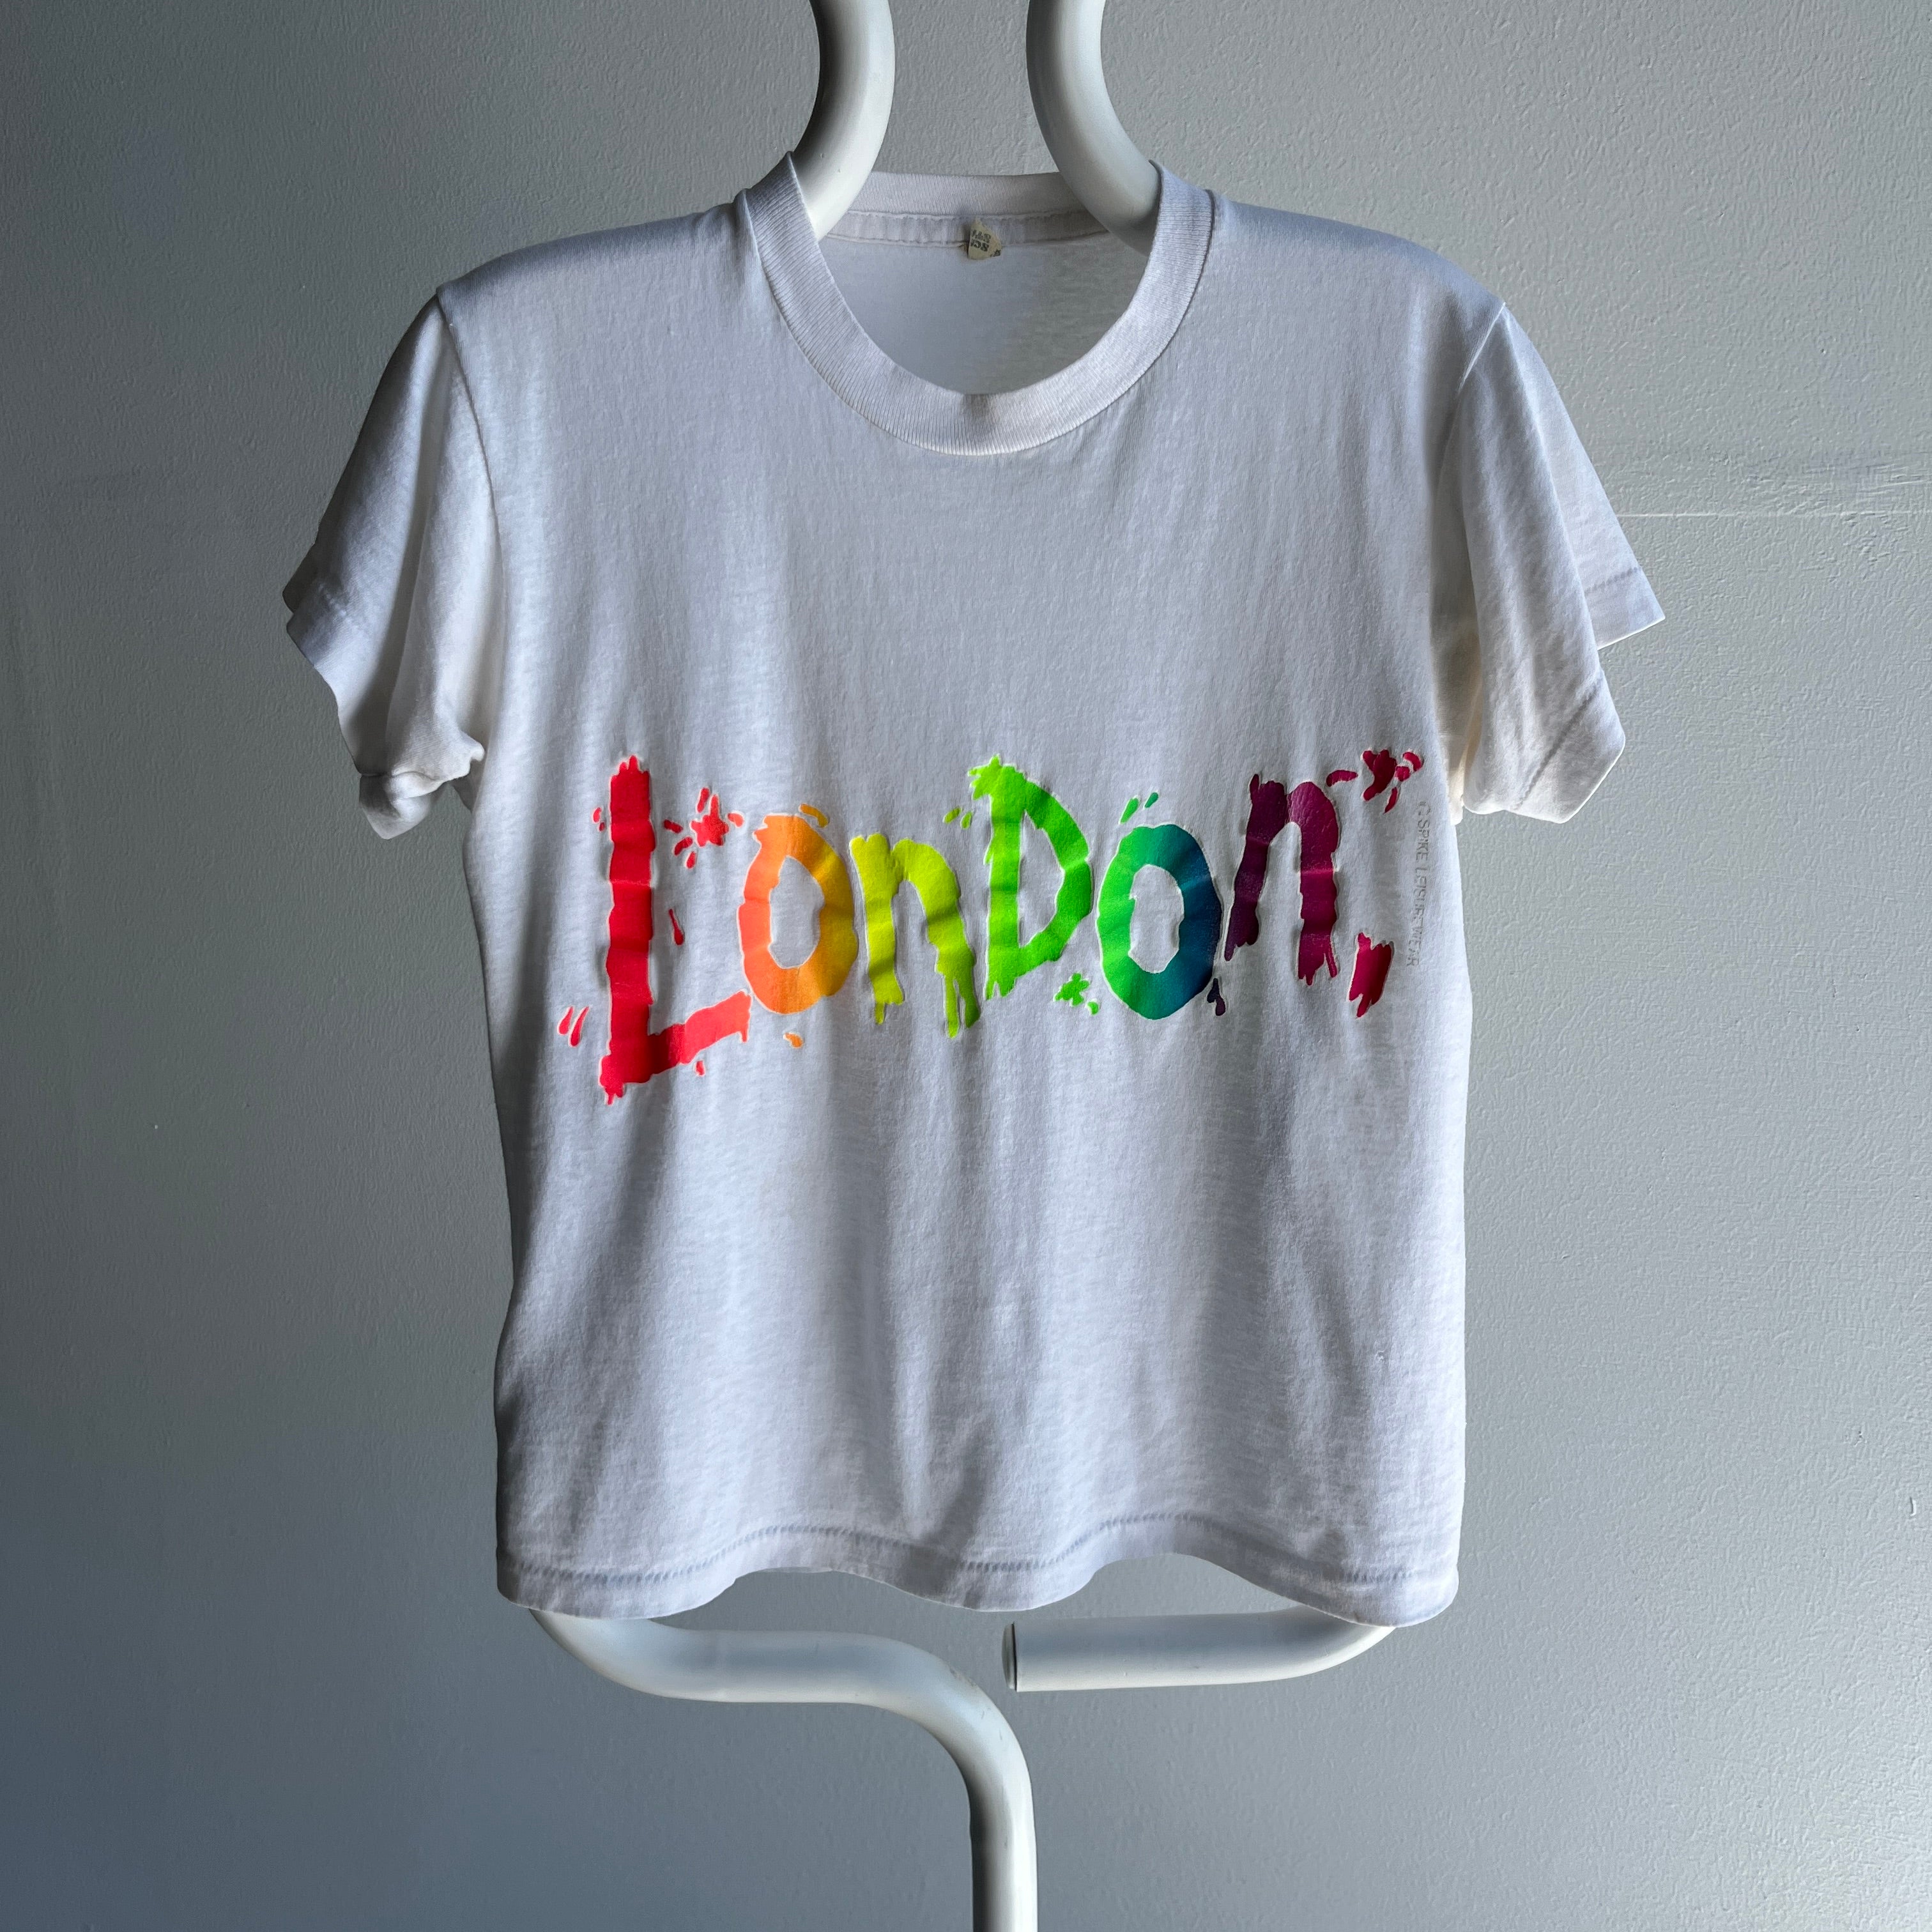 1980s London Tourist T-Shirt